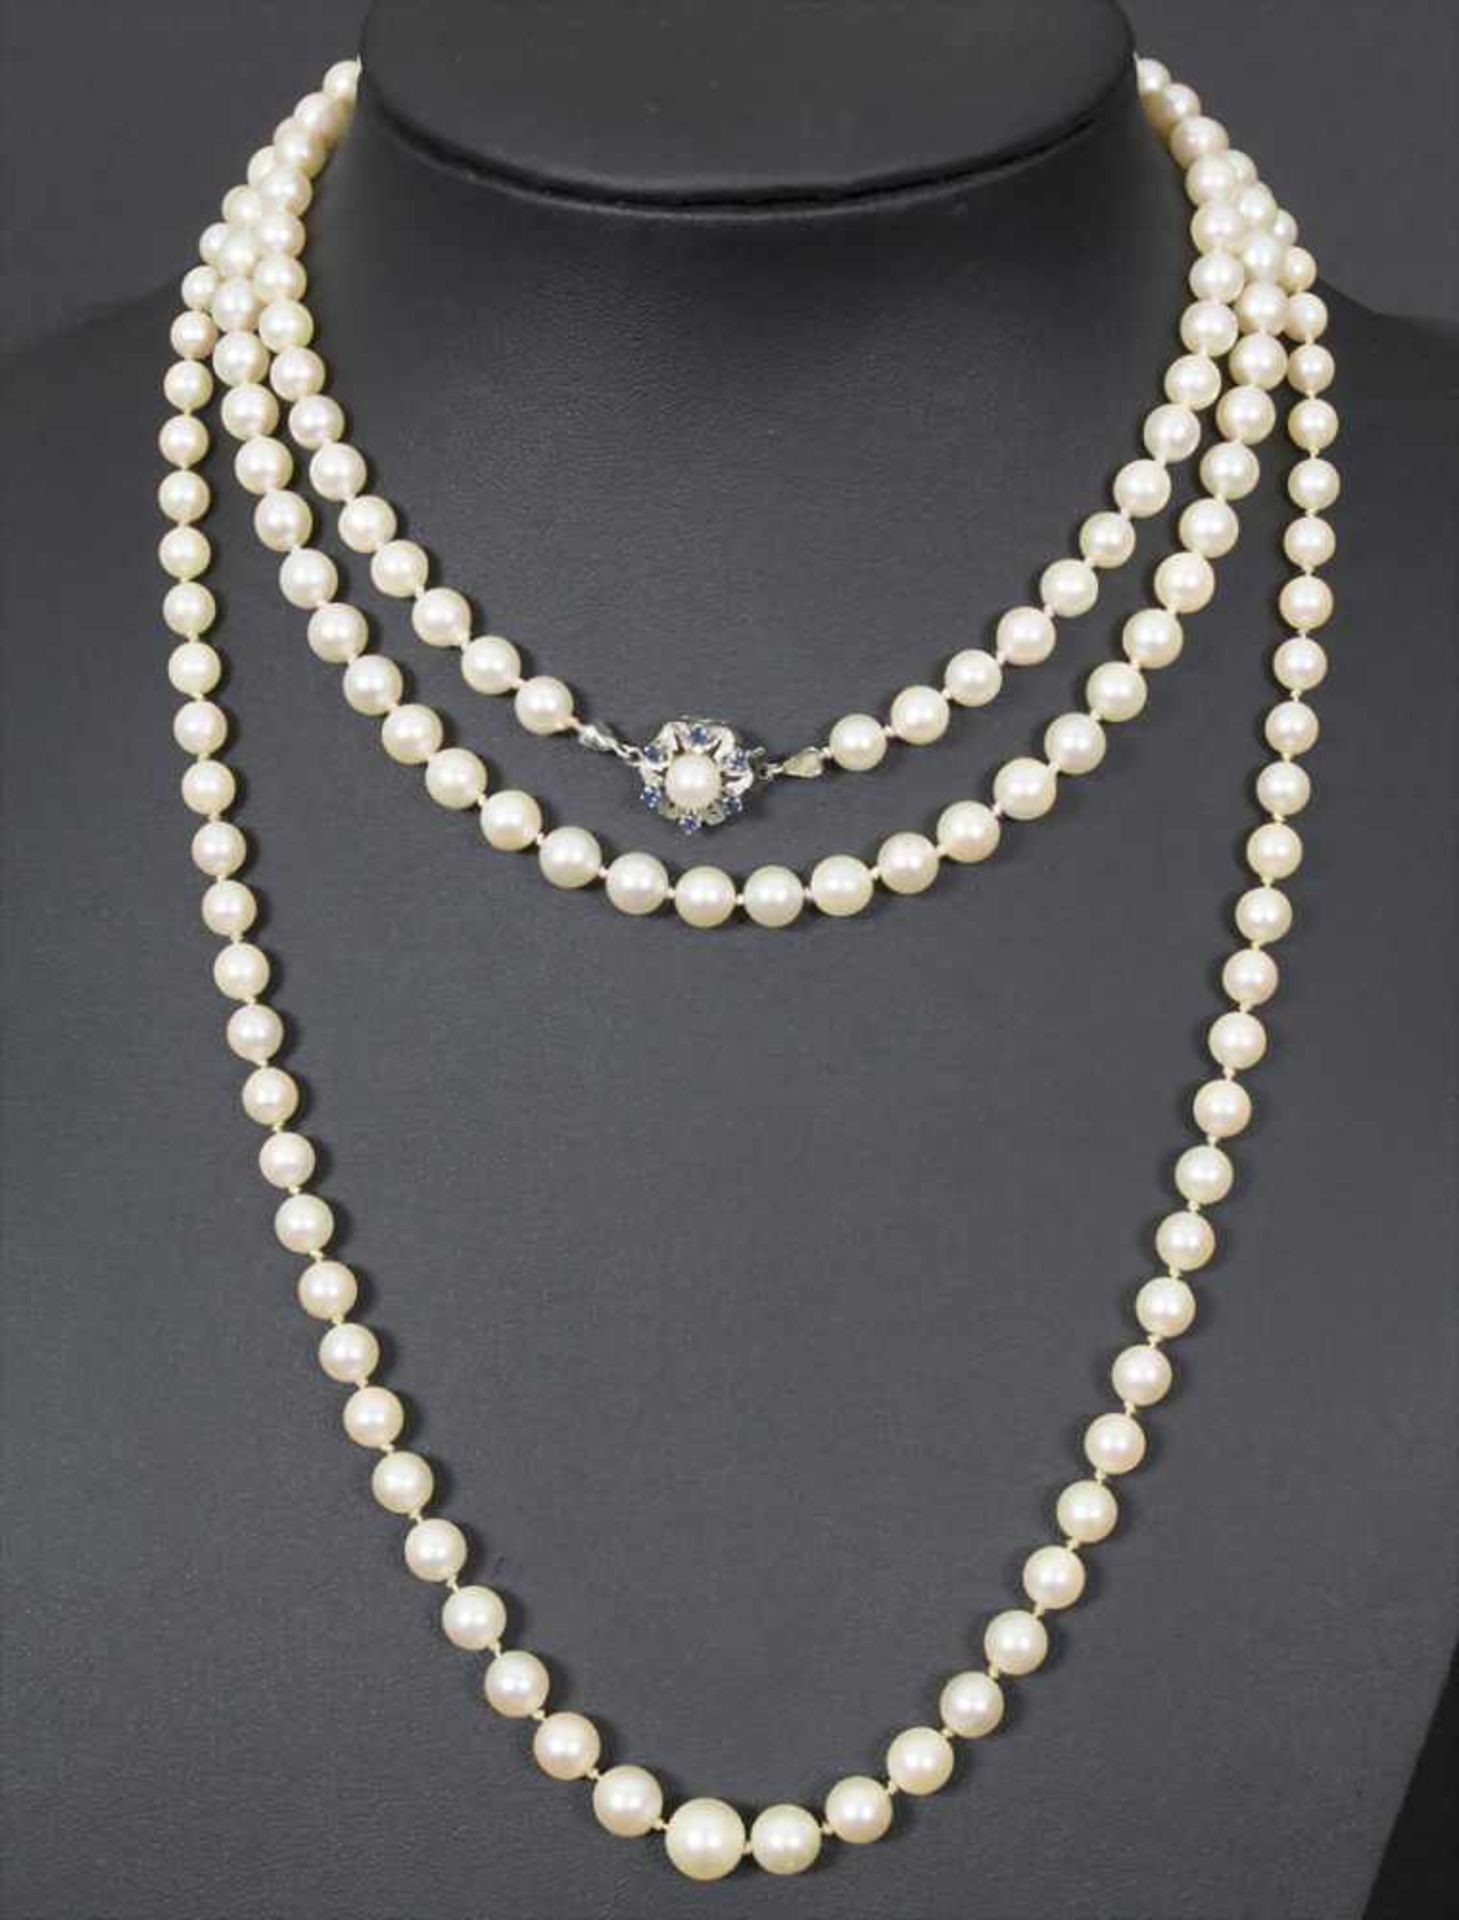 2 Perlenketten / Two pearl necklacesMaterial: Perlen einzeln geknotet, Verschluss Weißgold WG 585/